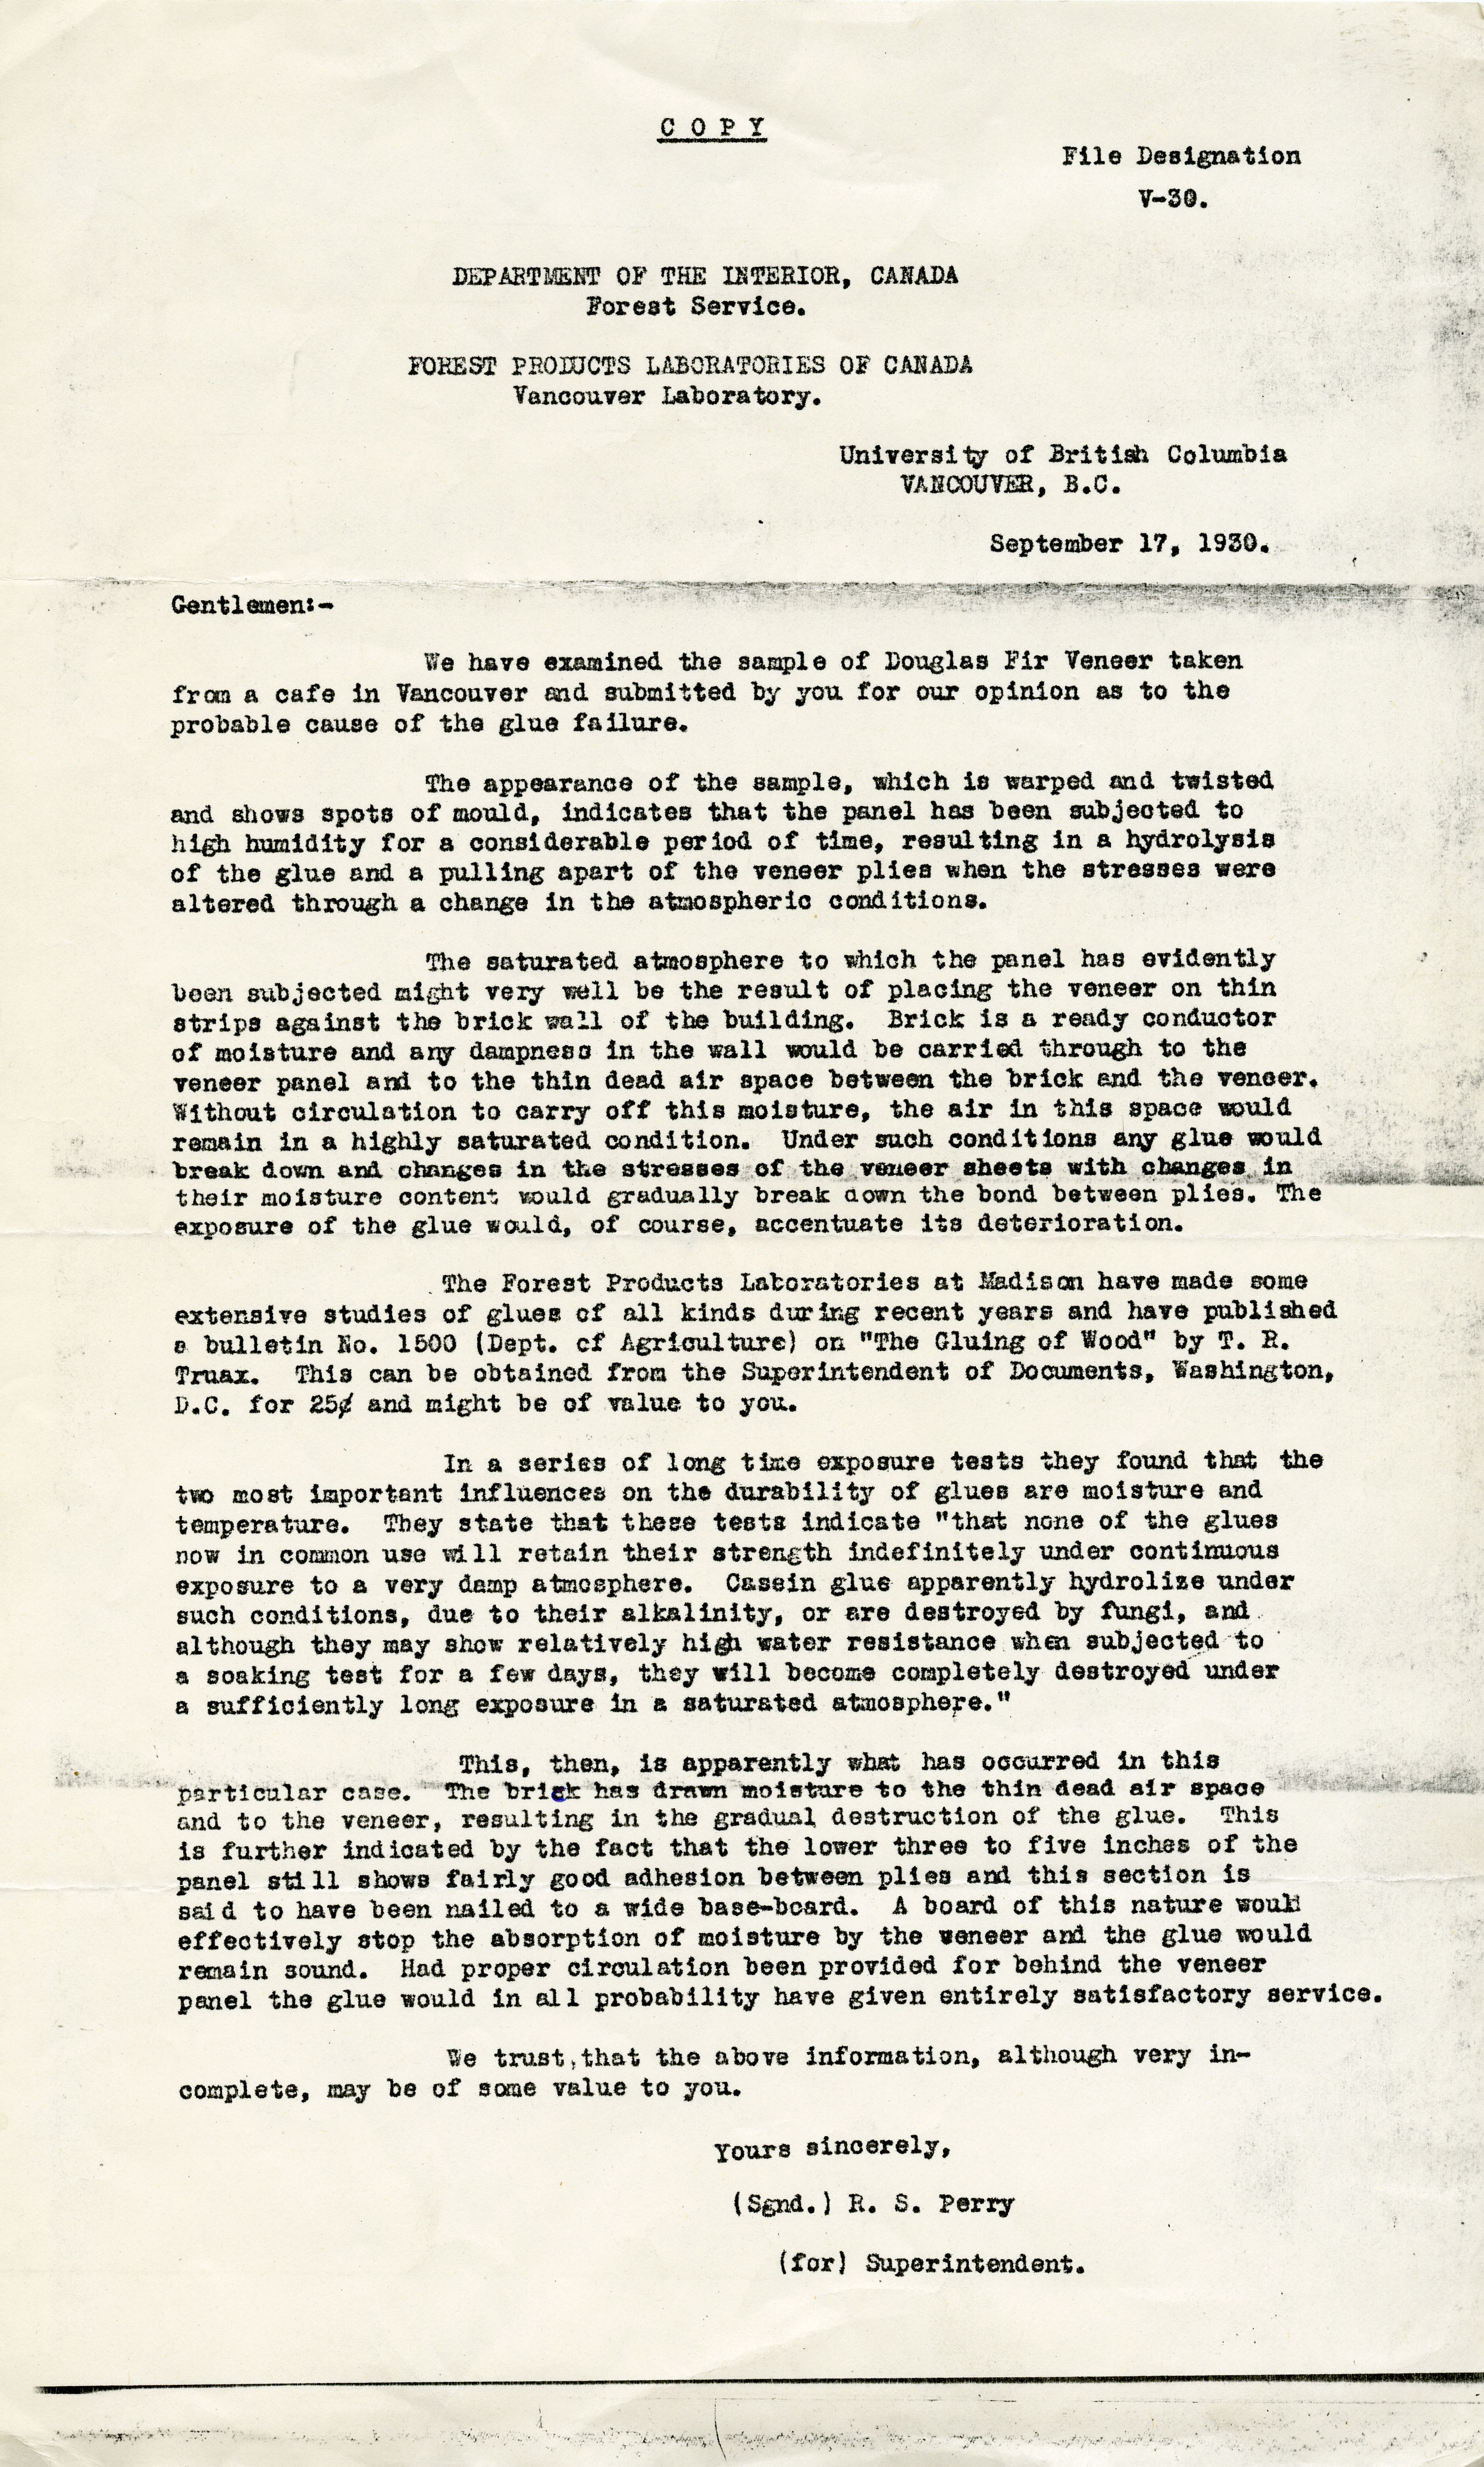 Correspondence, 1930 (JPG) Opens in new window